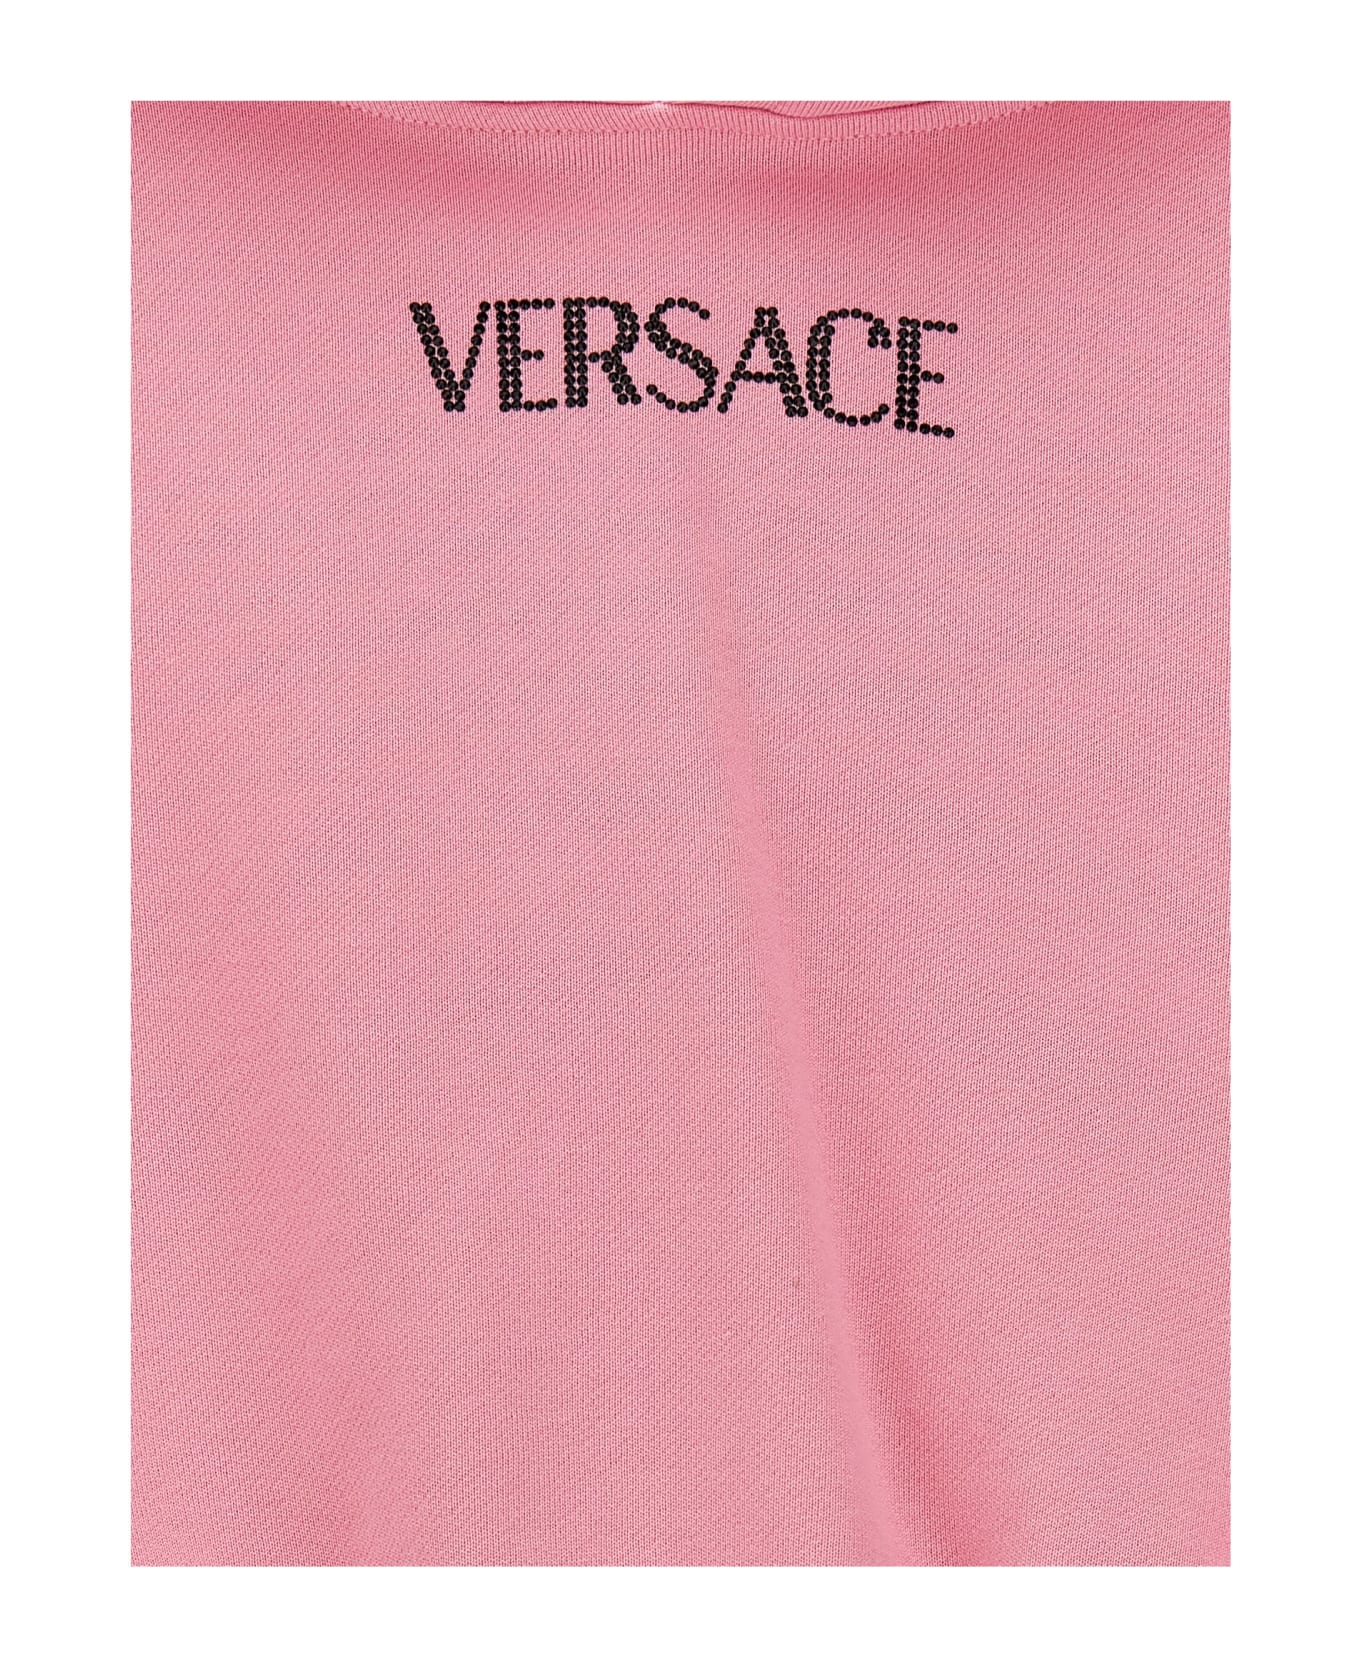 Versace Logo Hoodie - Pink ニットウェア＆スウェットシャツ